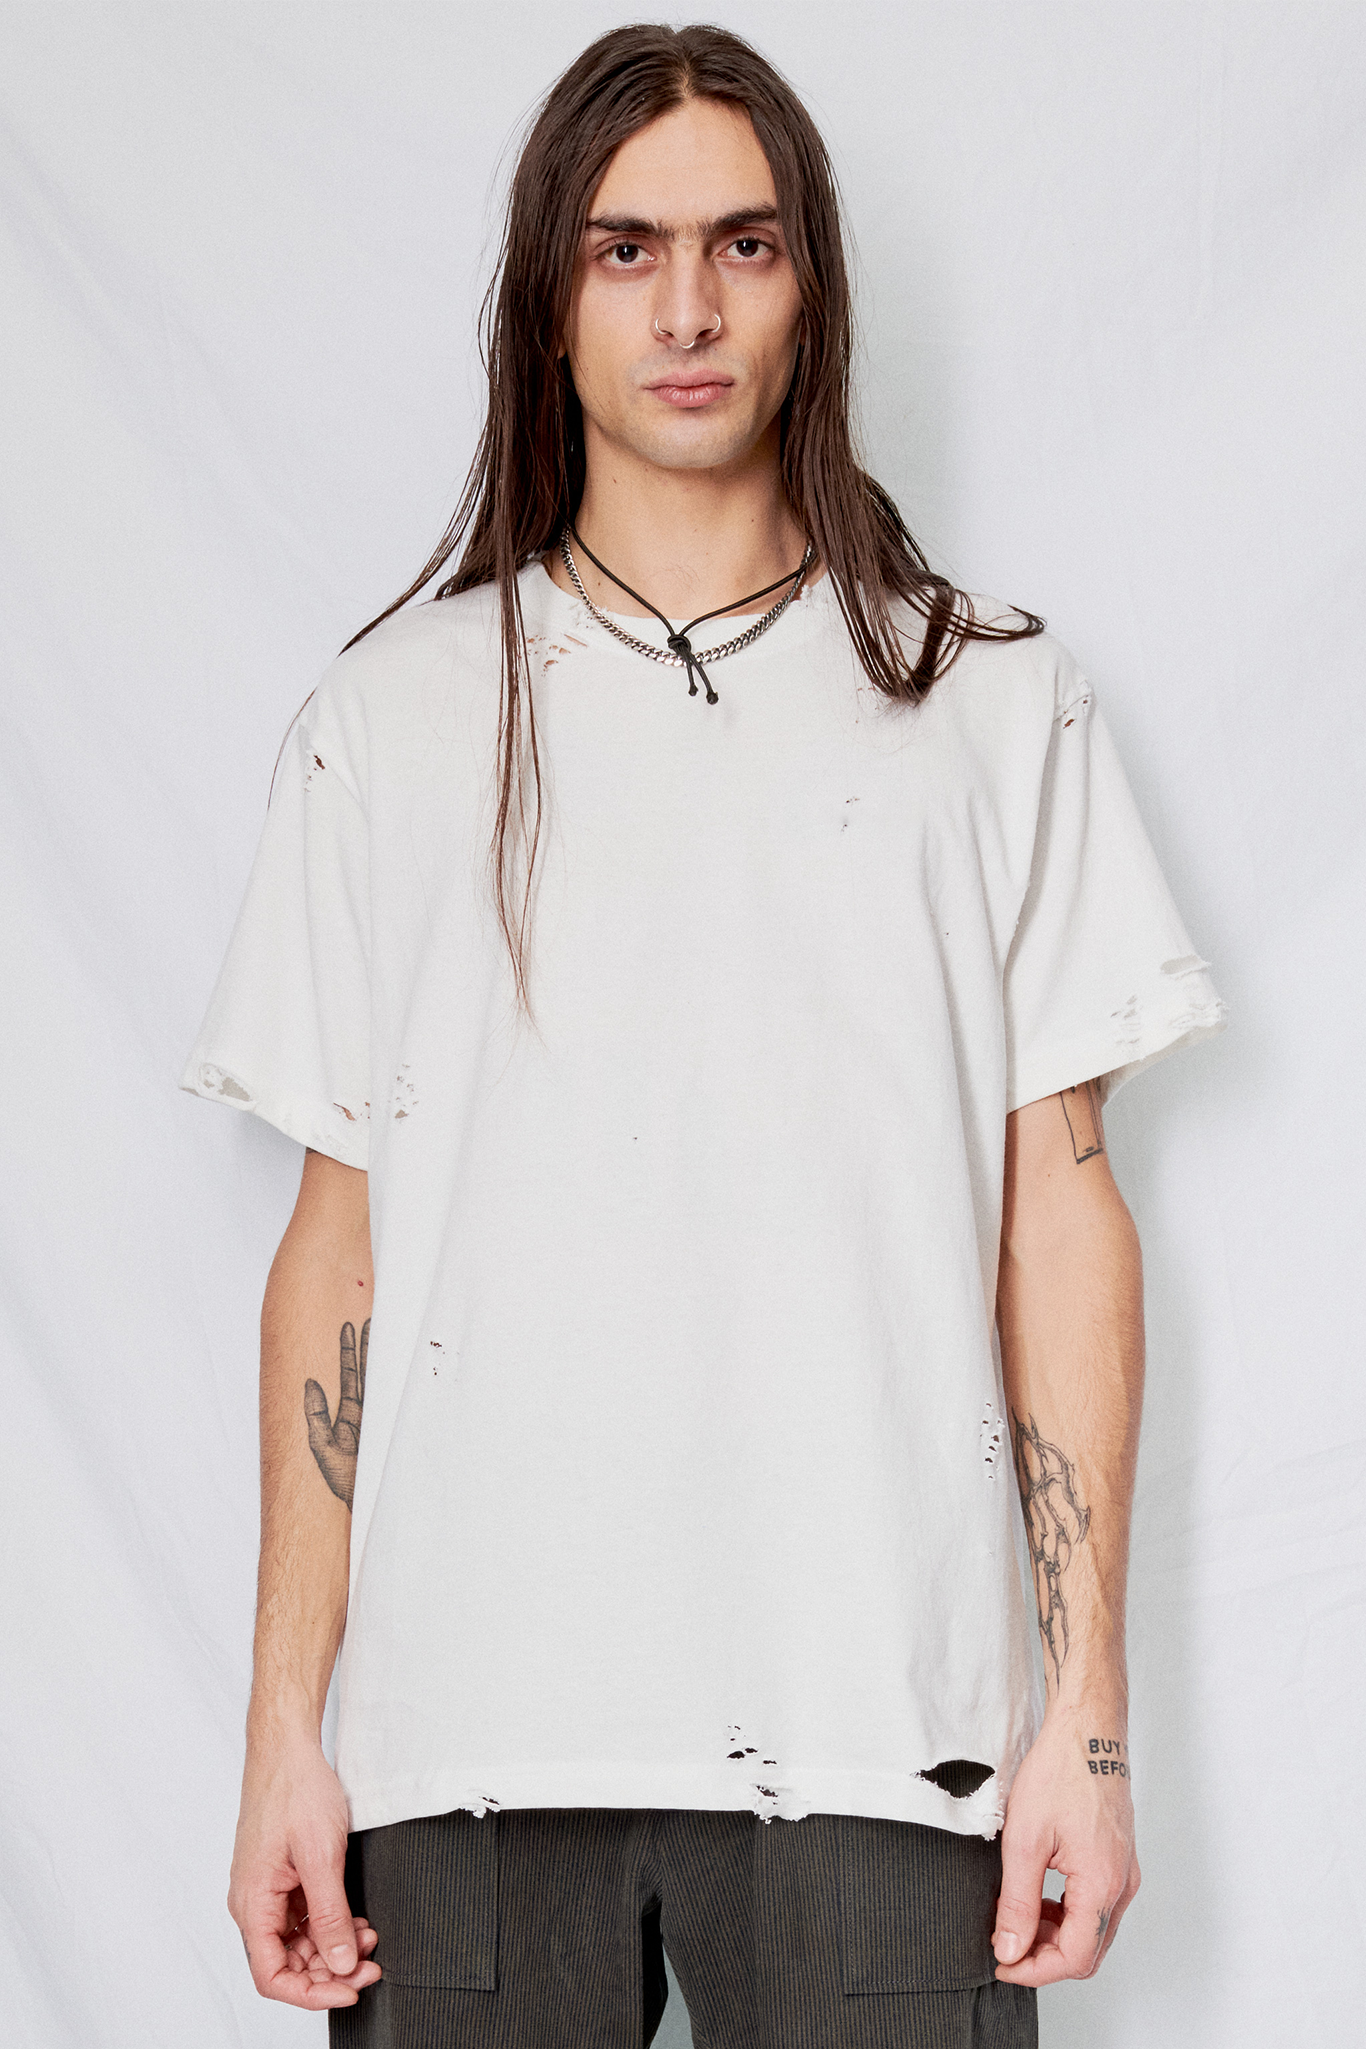 Distressed White T-Shirt